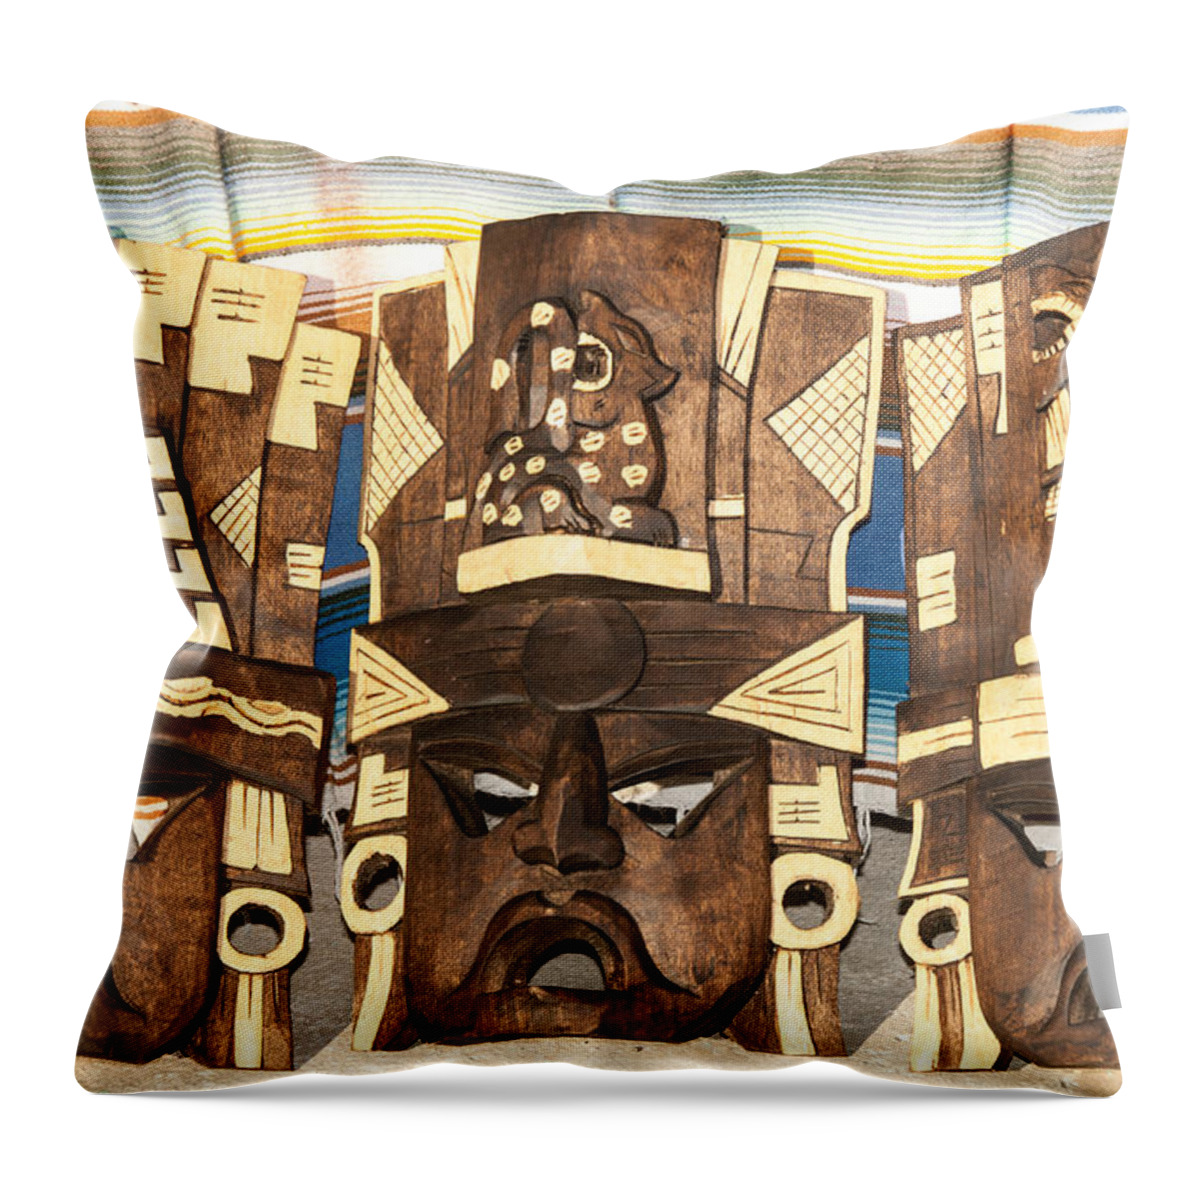 Yucatan Peninsula Throw Pillow featuring the digital art Souvenirs at Coba Village by Carol Ailles